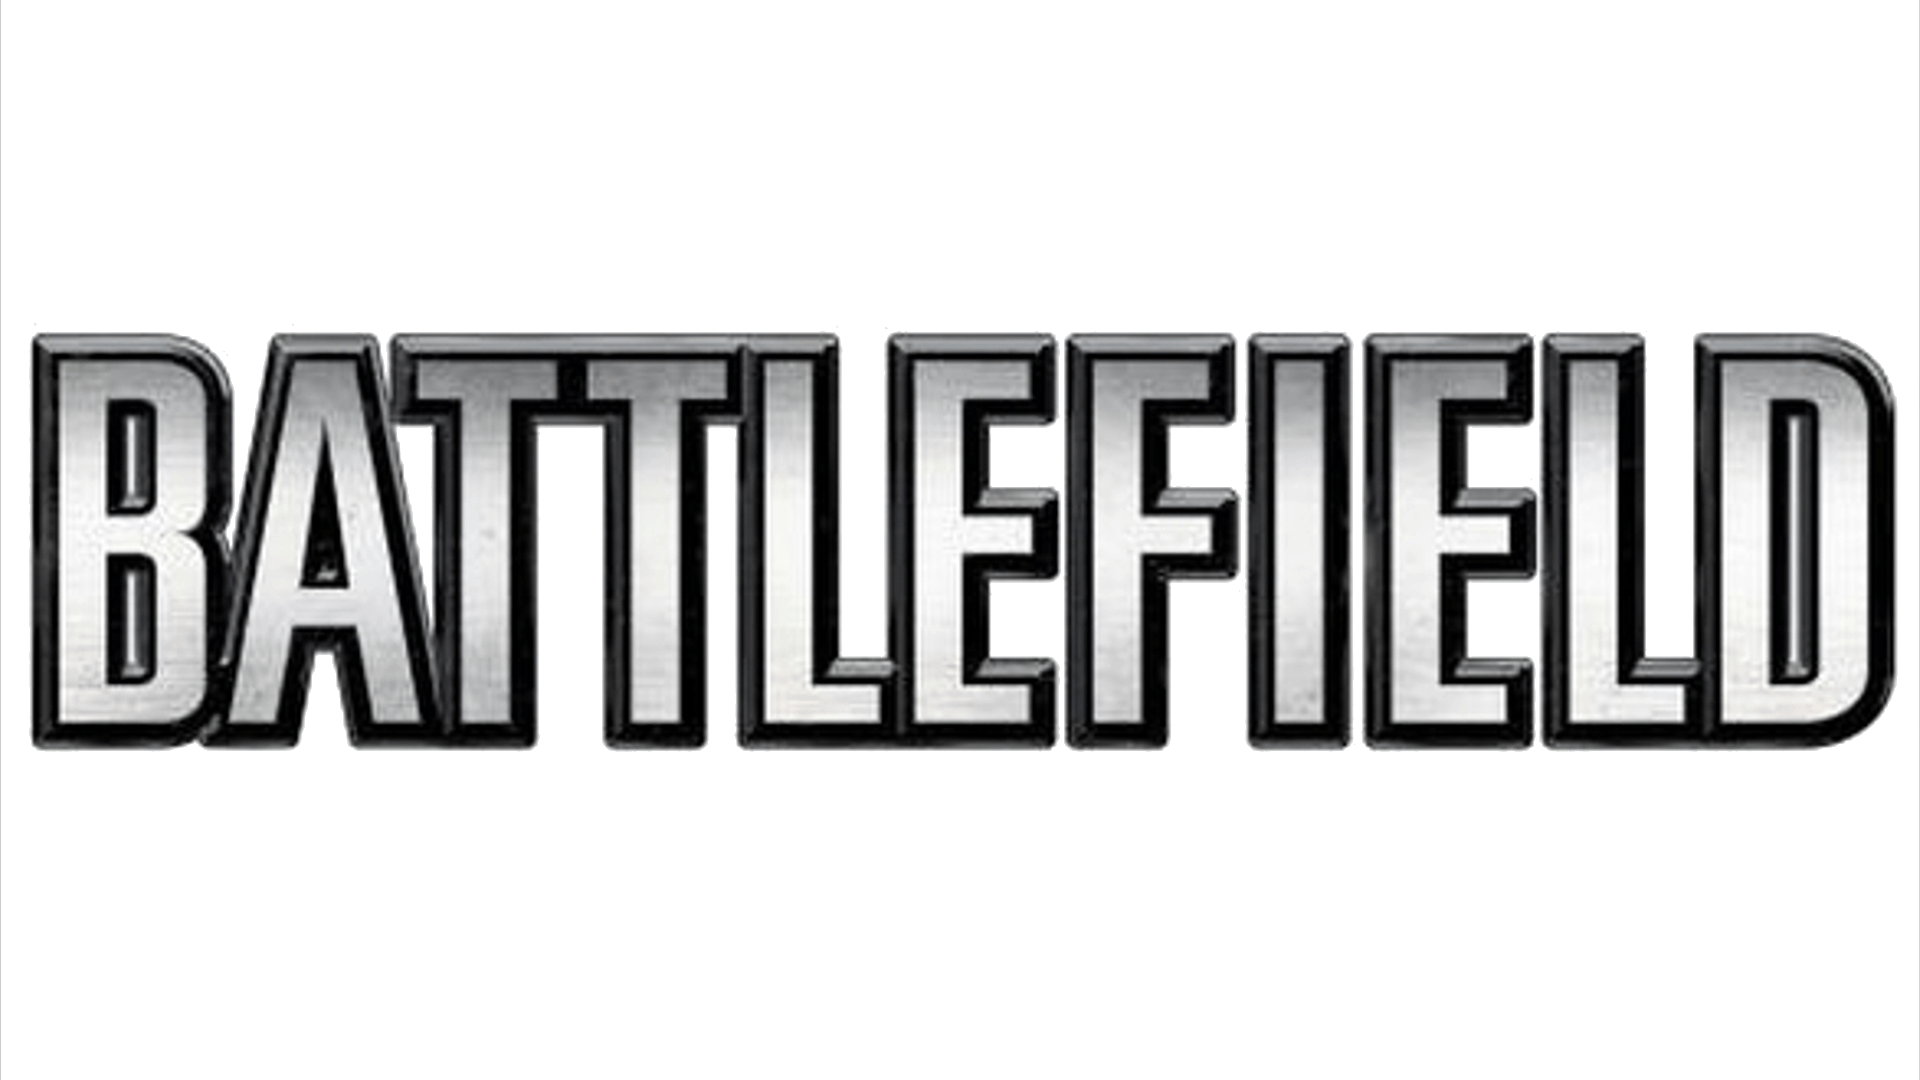 Battlefield Logo - Battlefield PNG image free download